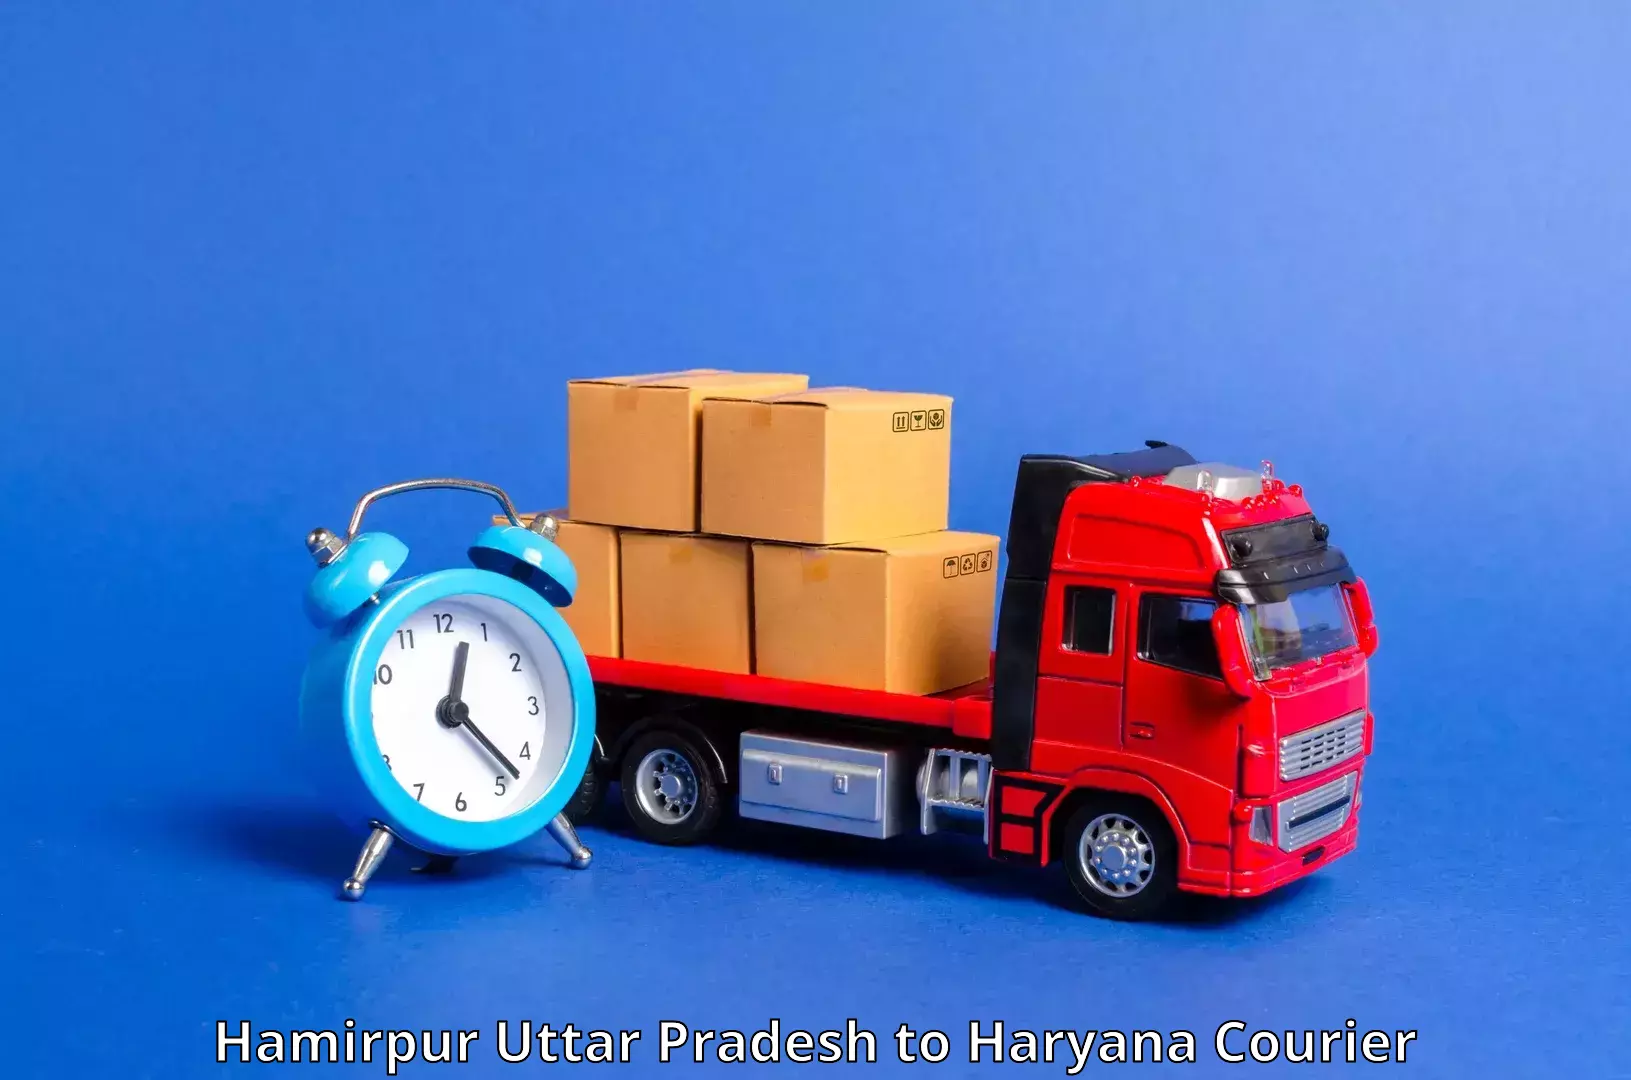 Next-generation courier services Hamirpur Uttar Pradesh to Faridabad